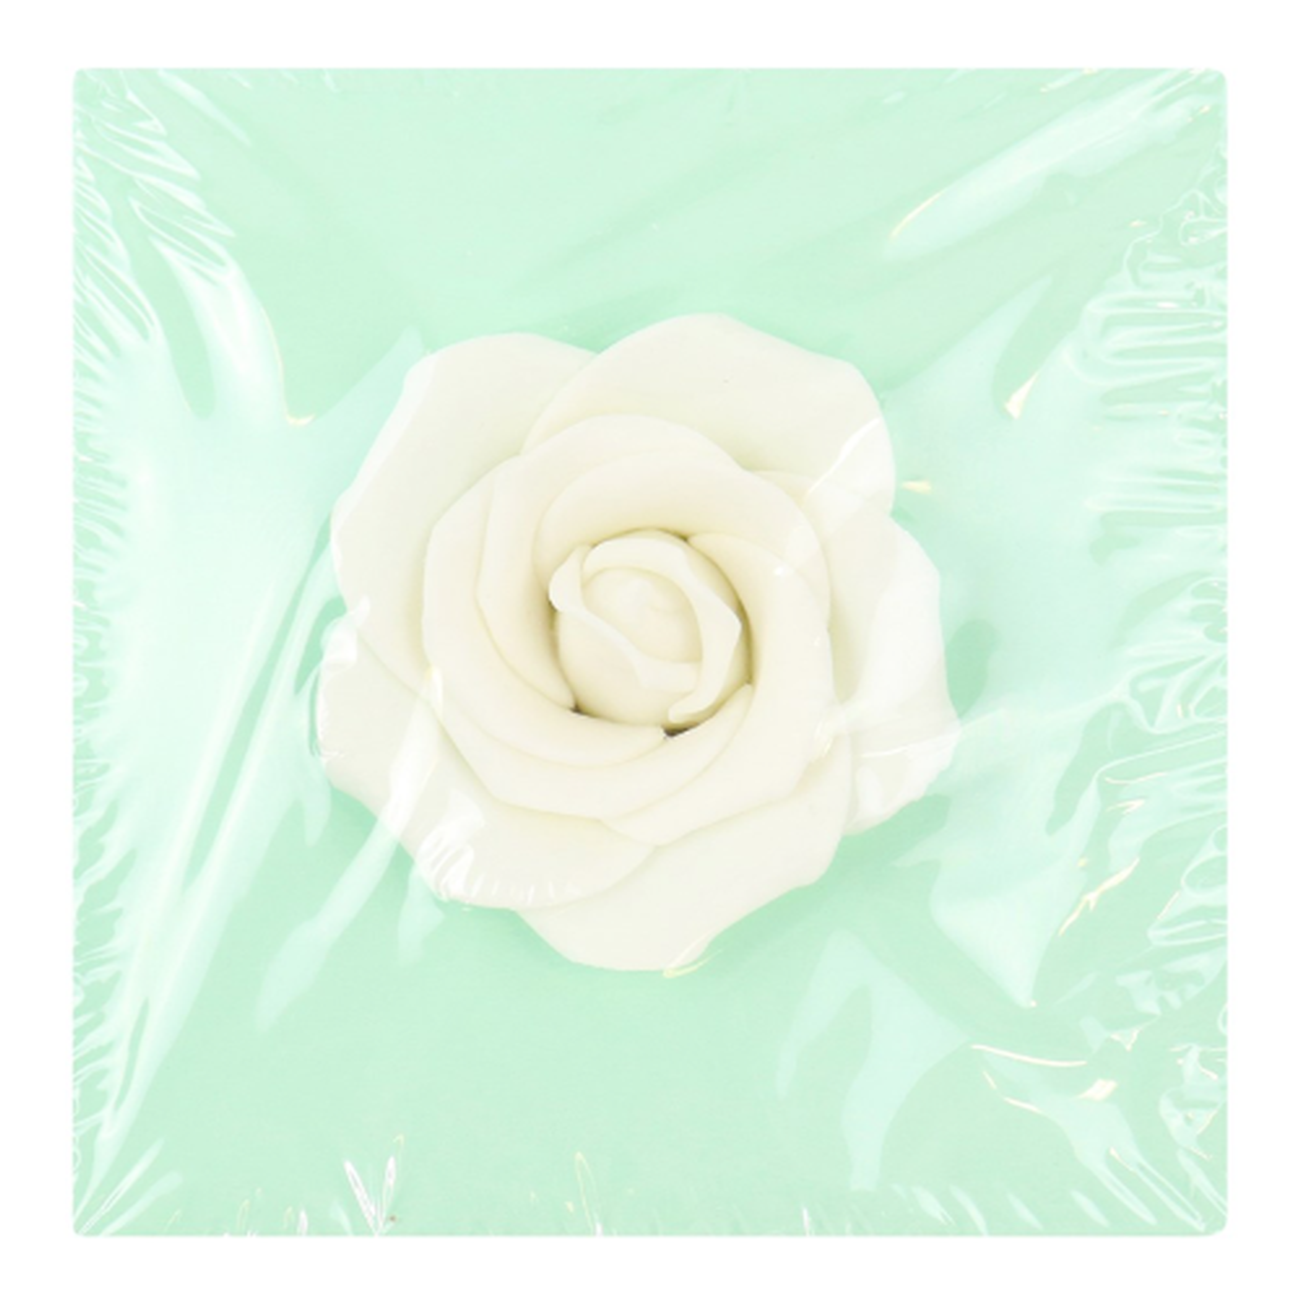 pme-white-sugar-rose-90mm - PME White Sugar Rose 